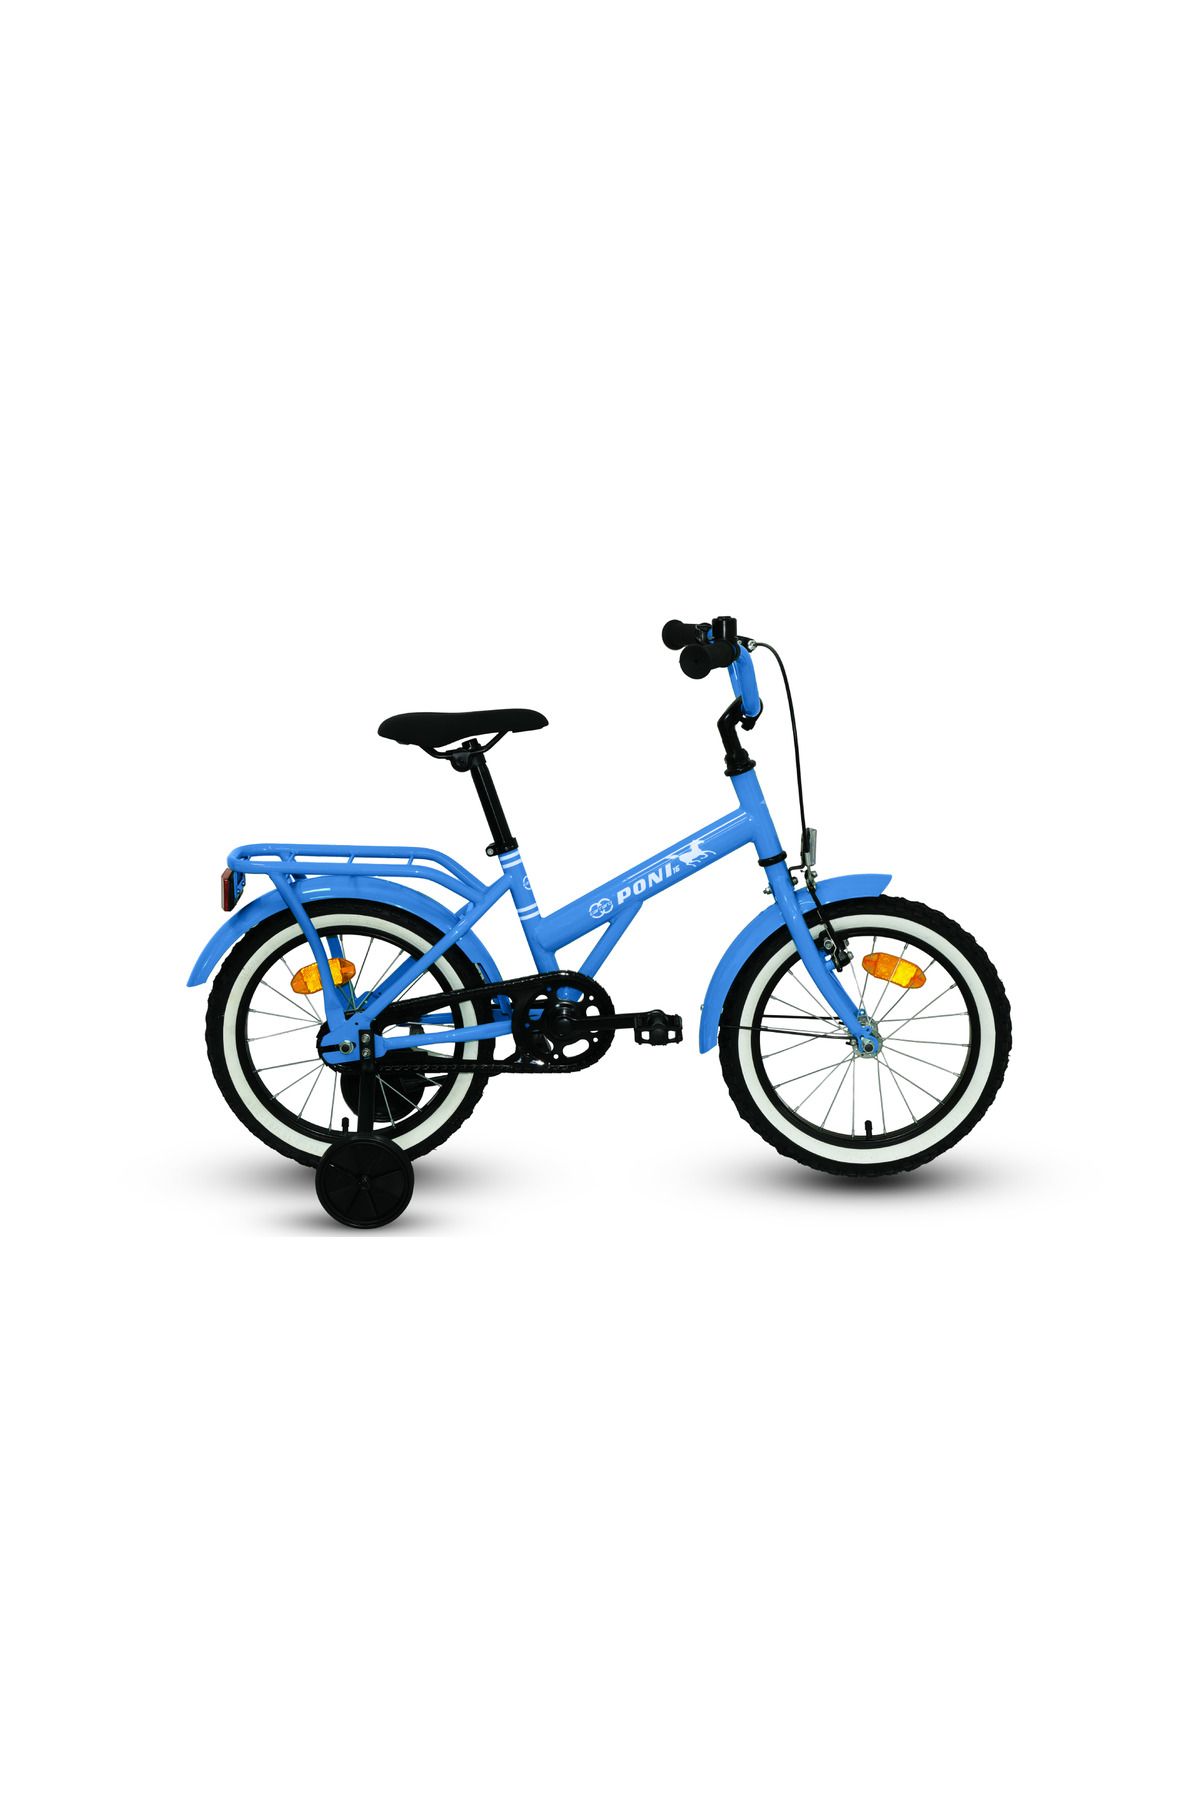 Carraro Unisex Poni 16 16 Jant Çocuk Bisikleti Mavi Beyaz